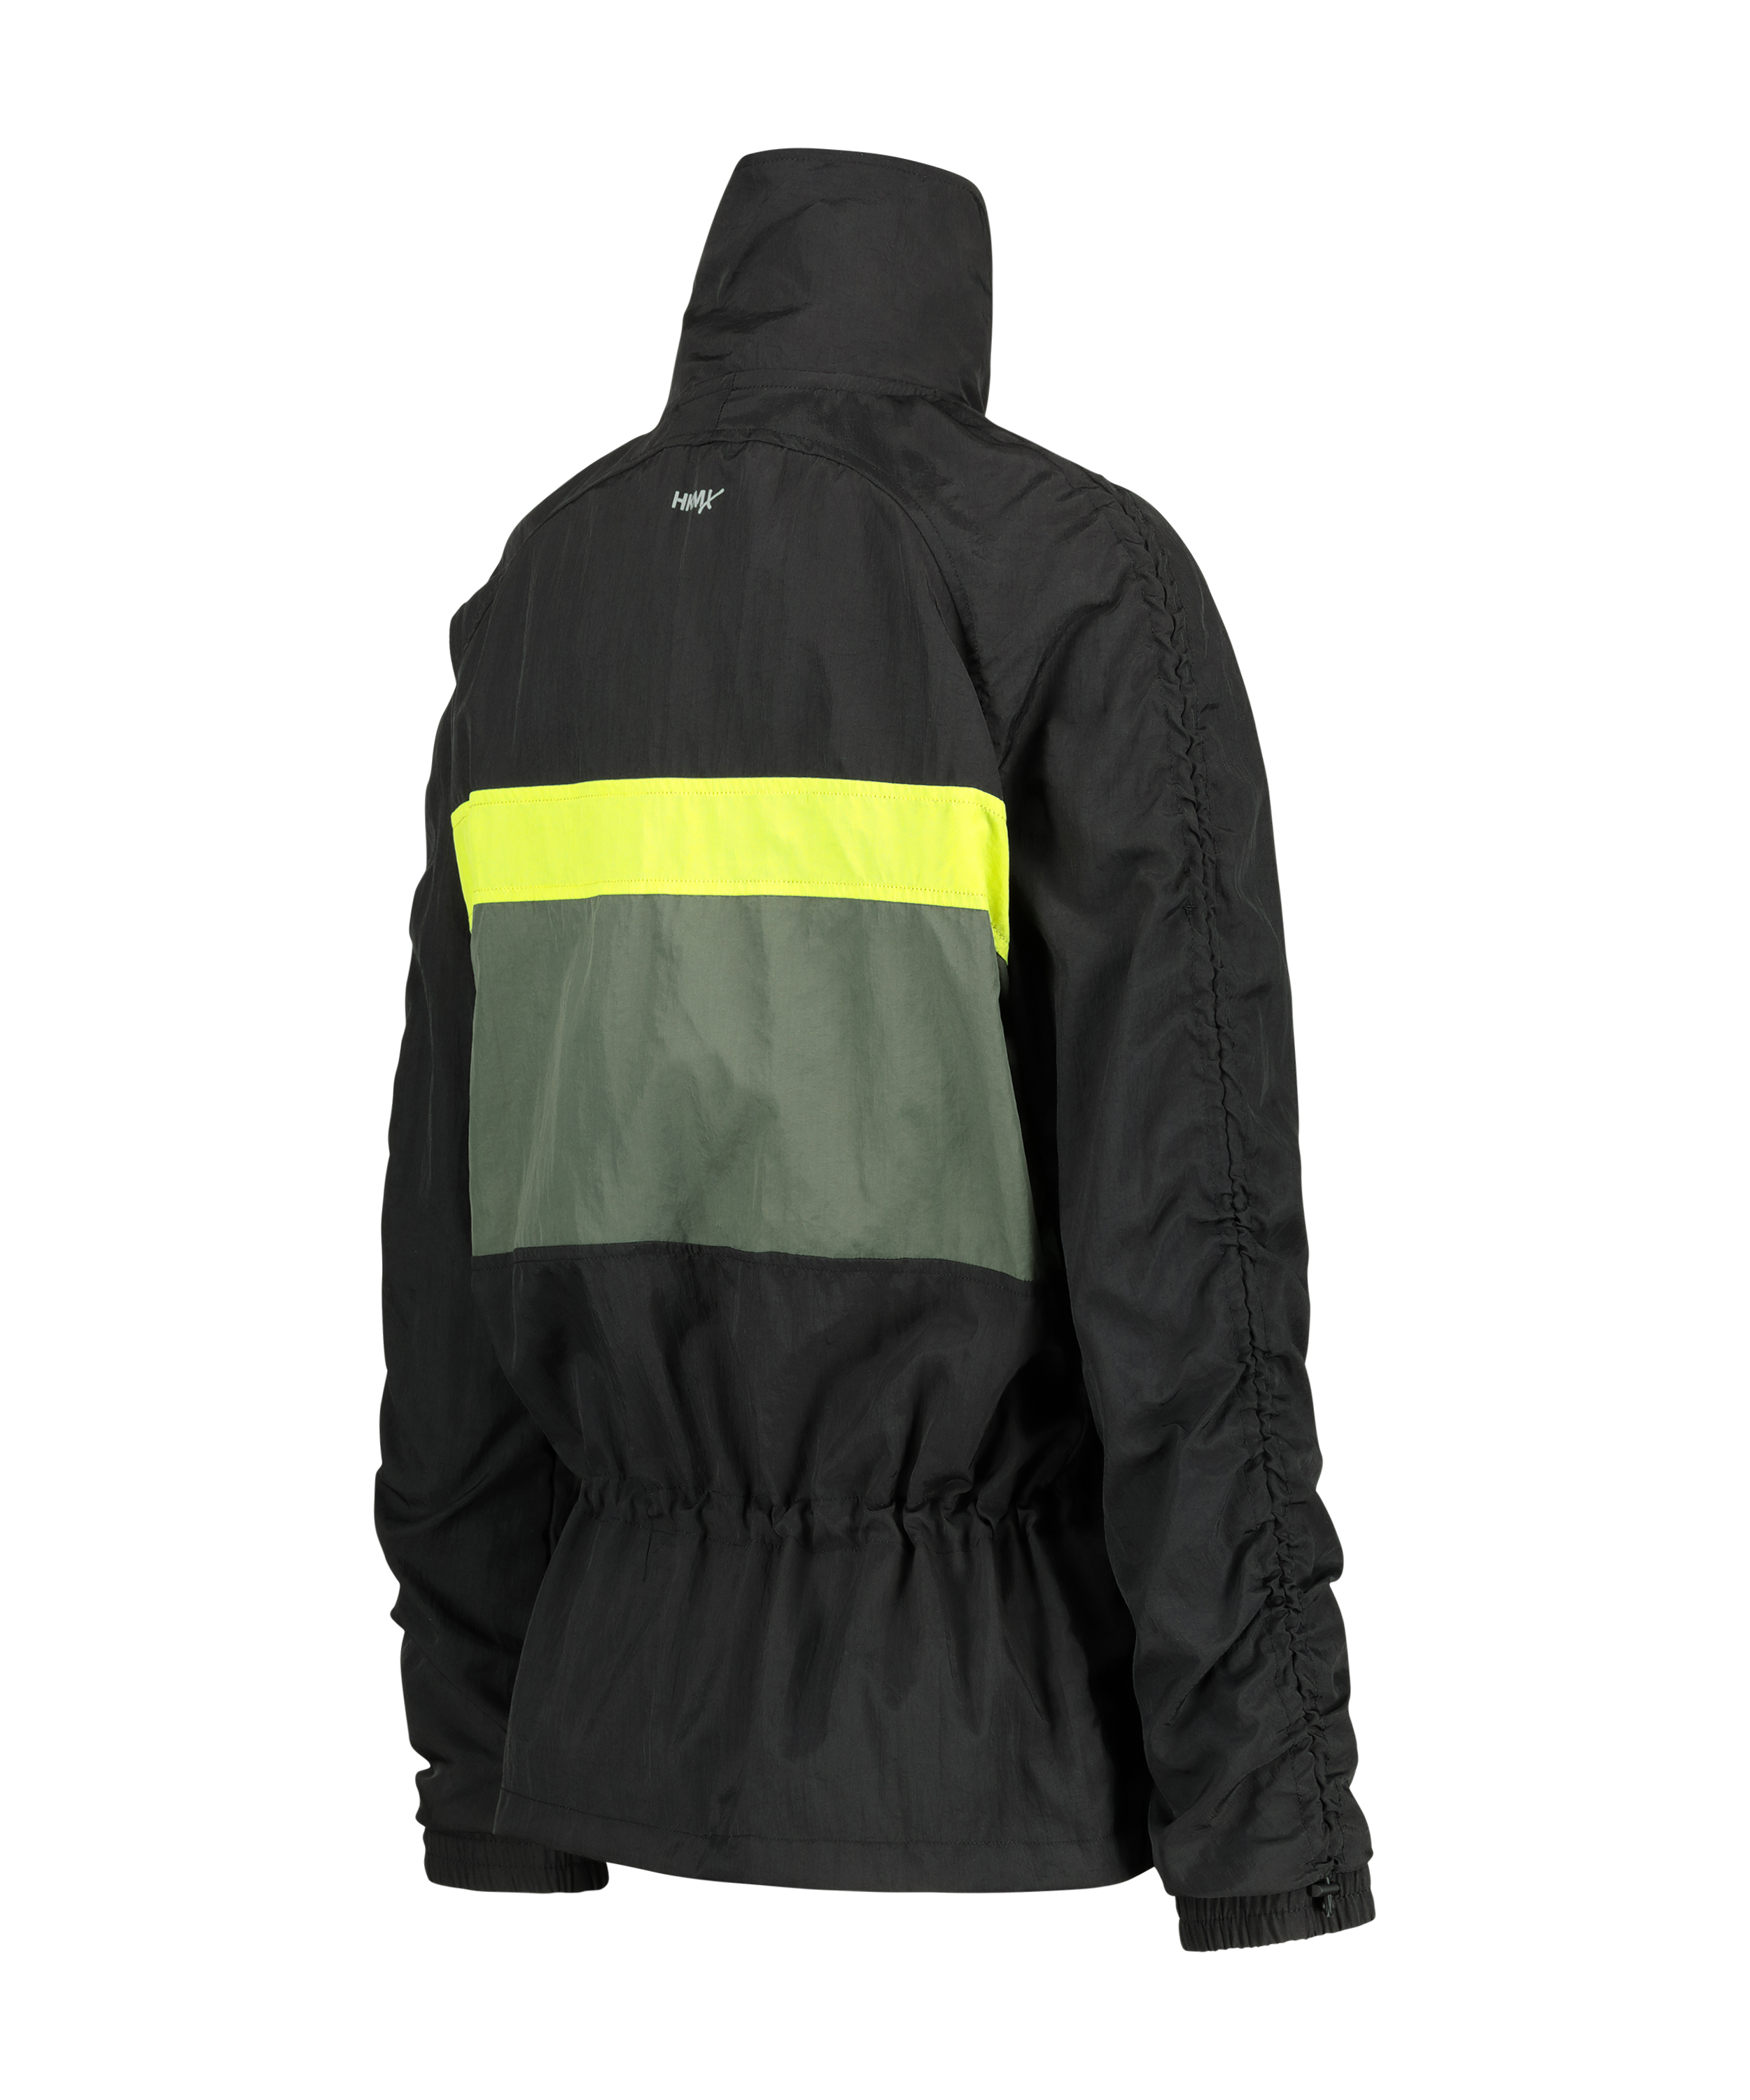 HKMX Shell Sports jacket, Black, main